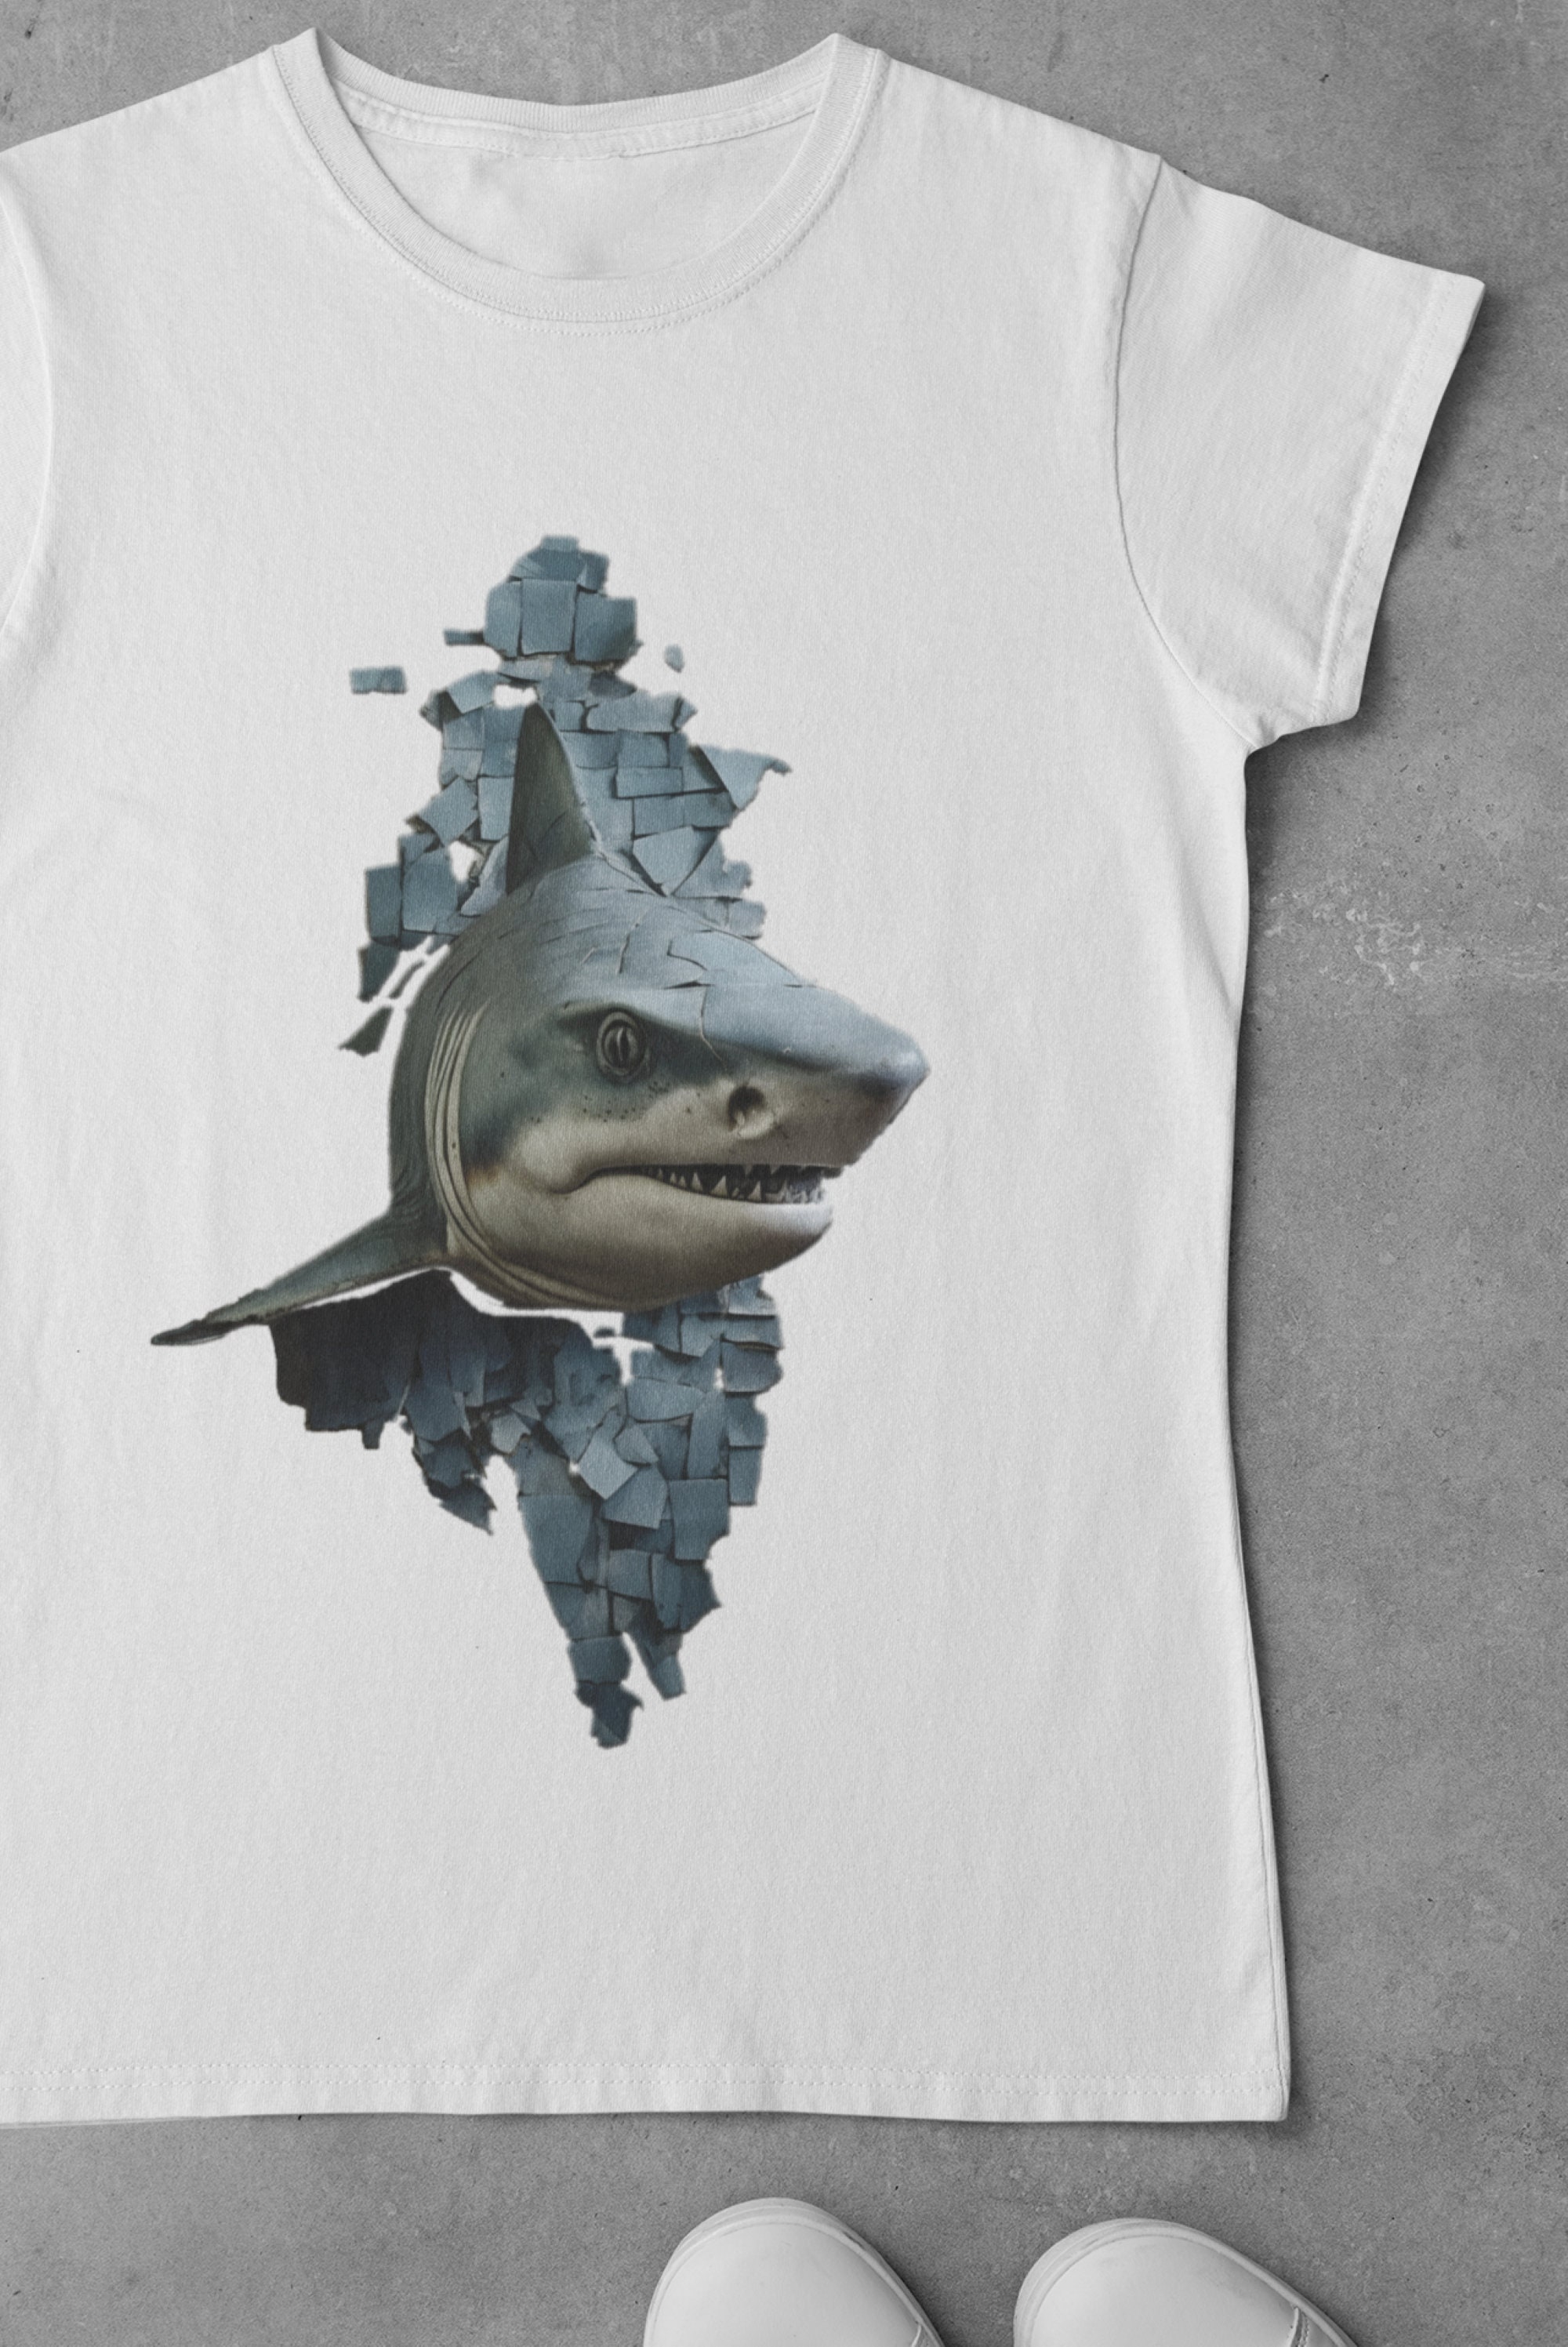 Shark Real Predator t-shirt design - Buy t-shirt designs